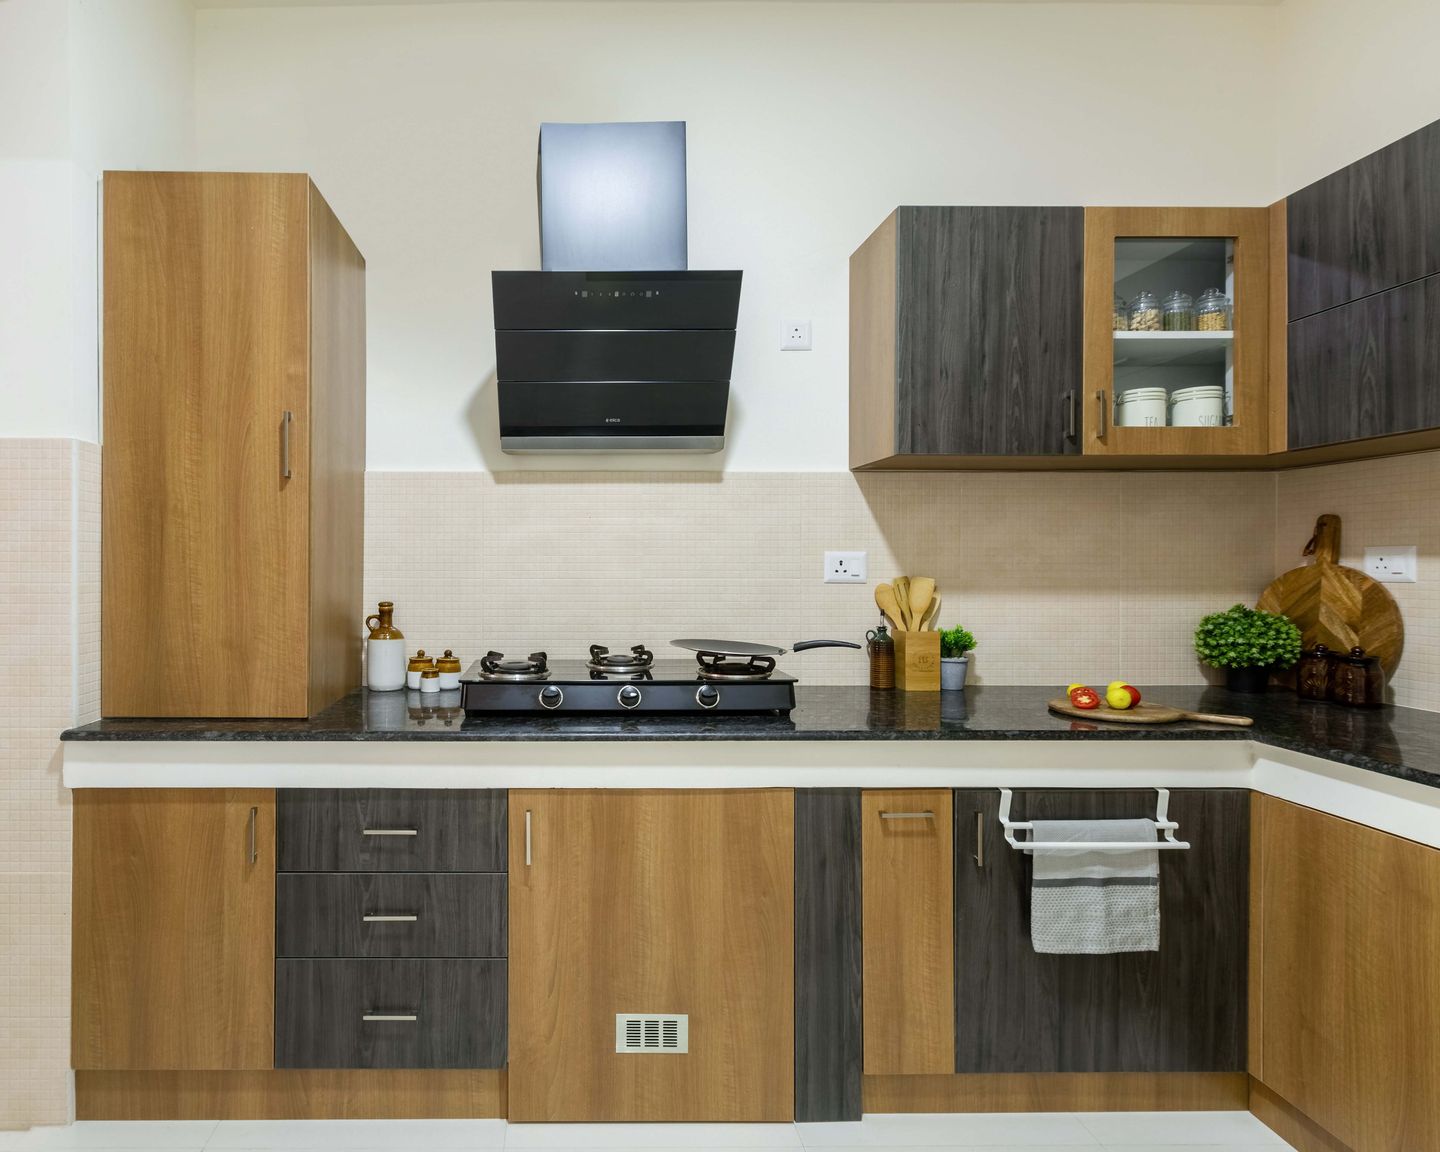 8x6 Ft L-Shaped Modular Kitchen Design In Brown And Grey - Livspace 8x6 Ft L-Shaped Kitchen Design With Off-White Dado Tiles - Livspace